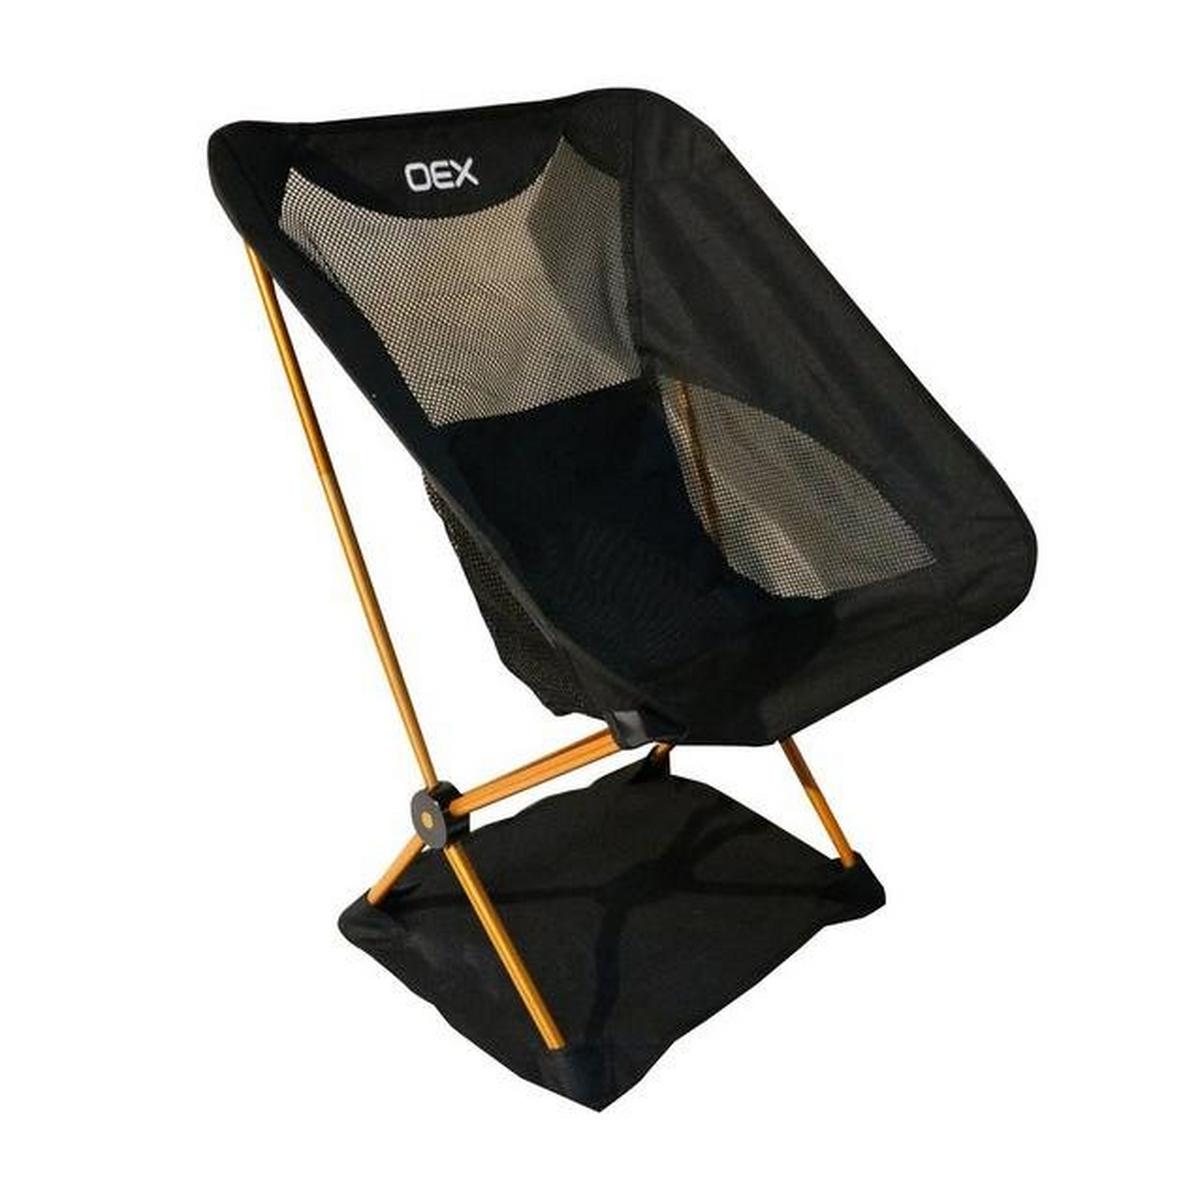 Oex Ultra-Lite Chair - Black